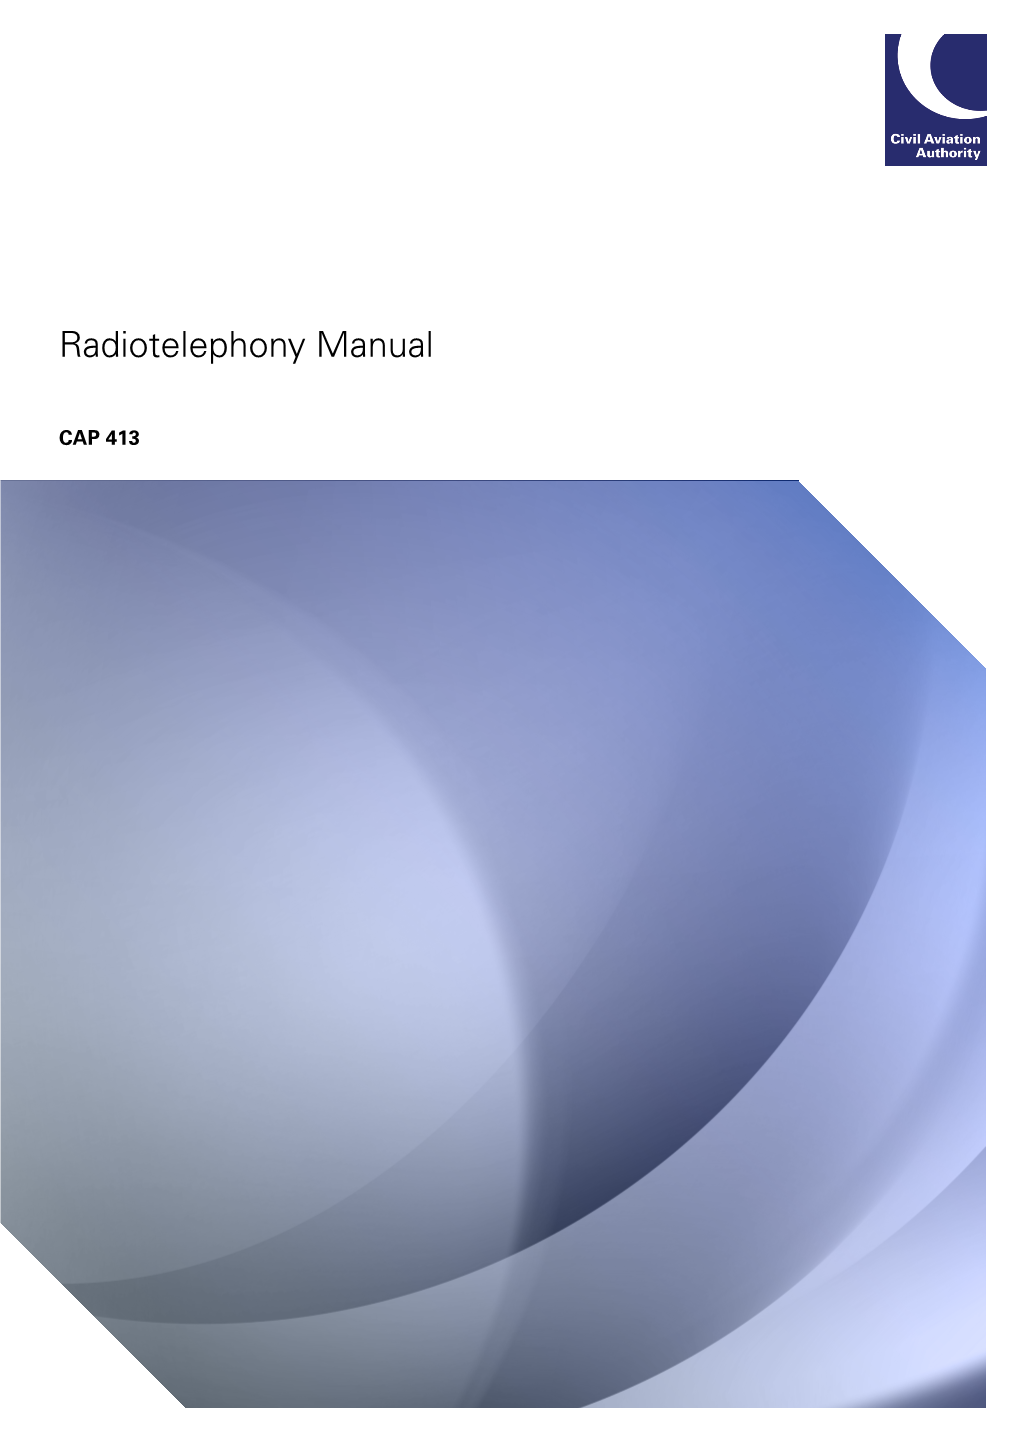 CAP 413 Radiotelephony Manual